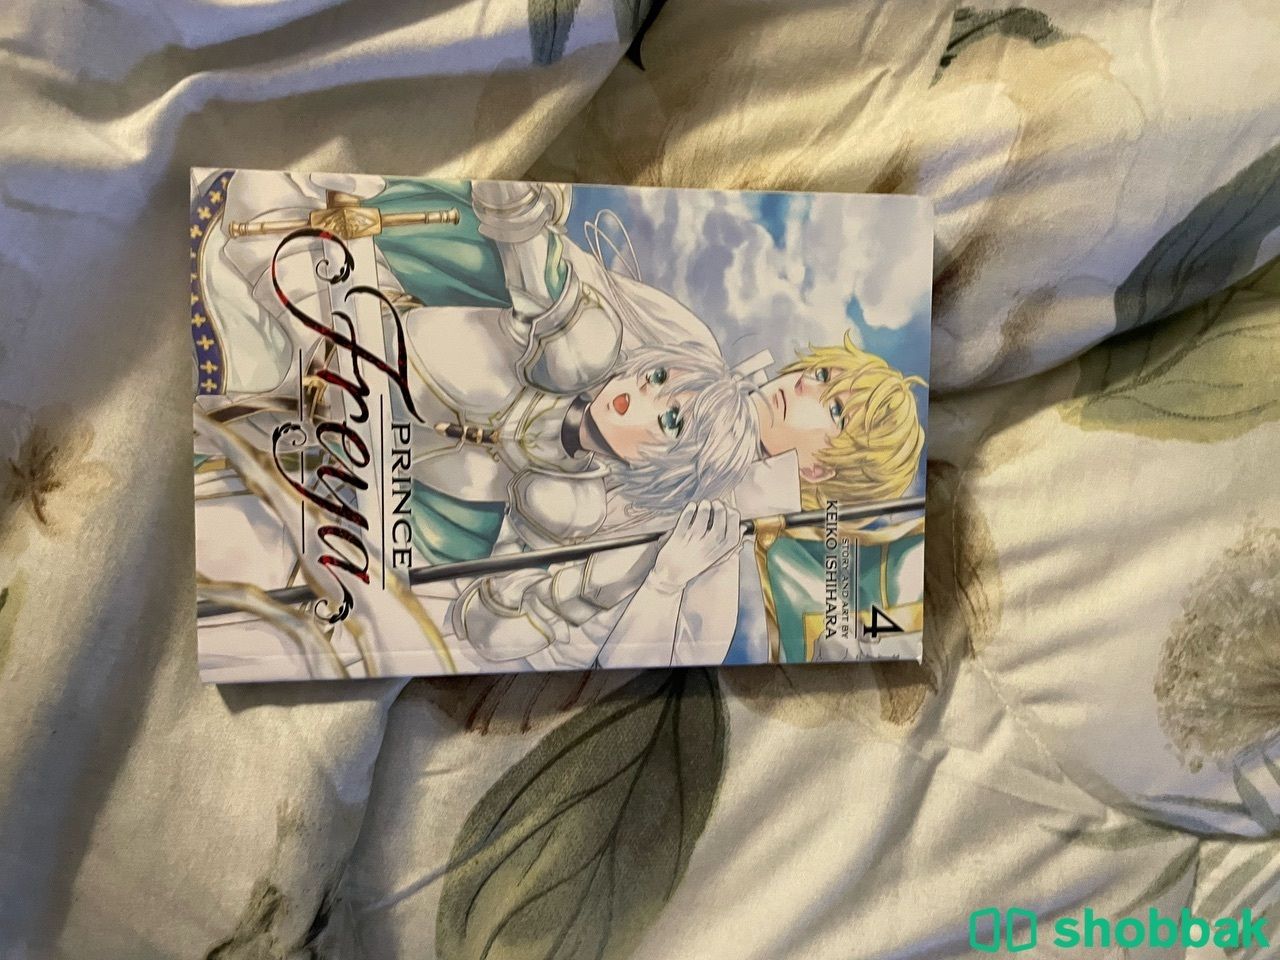 Prince freya /برنس فريا(manga) volume 1-6 *new* Shobbak Saudi Arabia